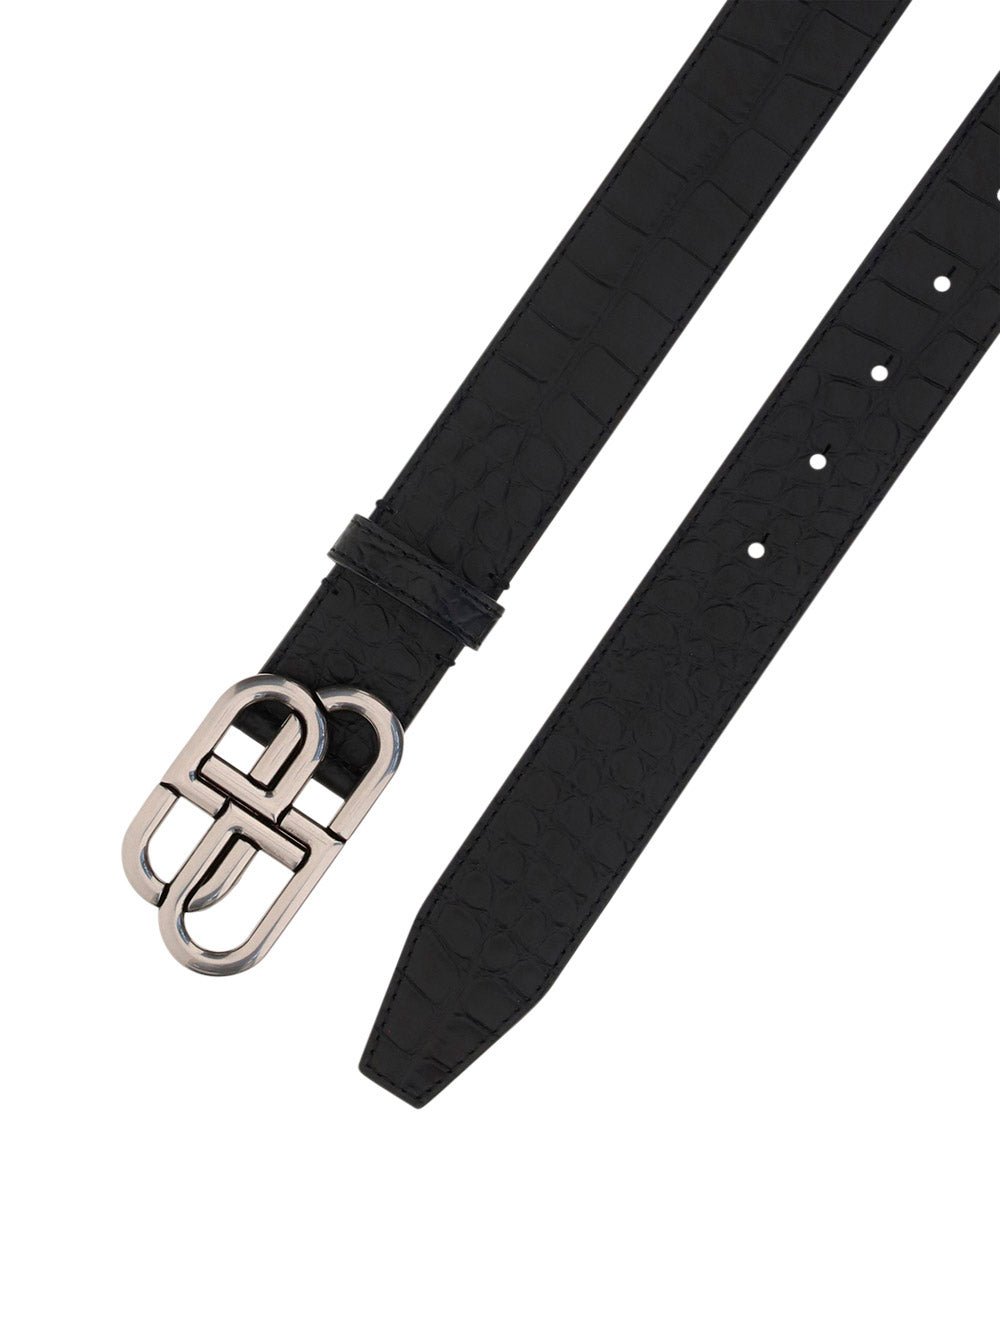 BB Large Belt in Embossed Crocodile Leather & Palladium Buckle - Black